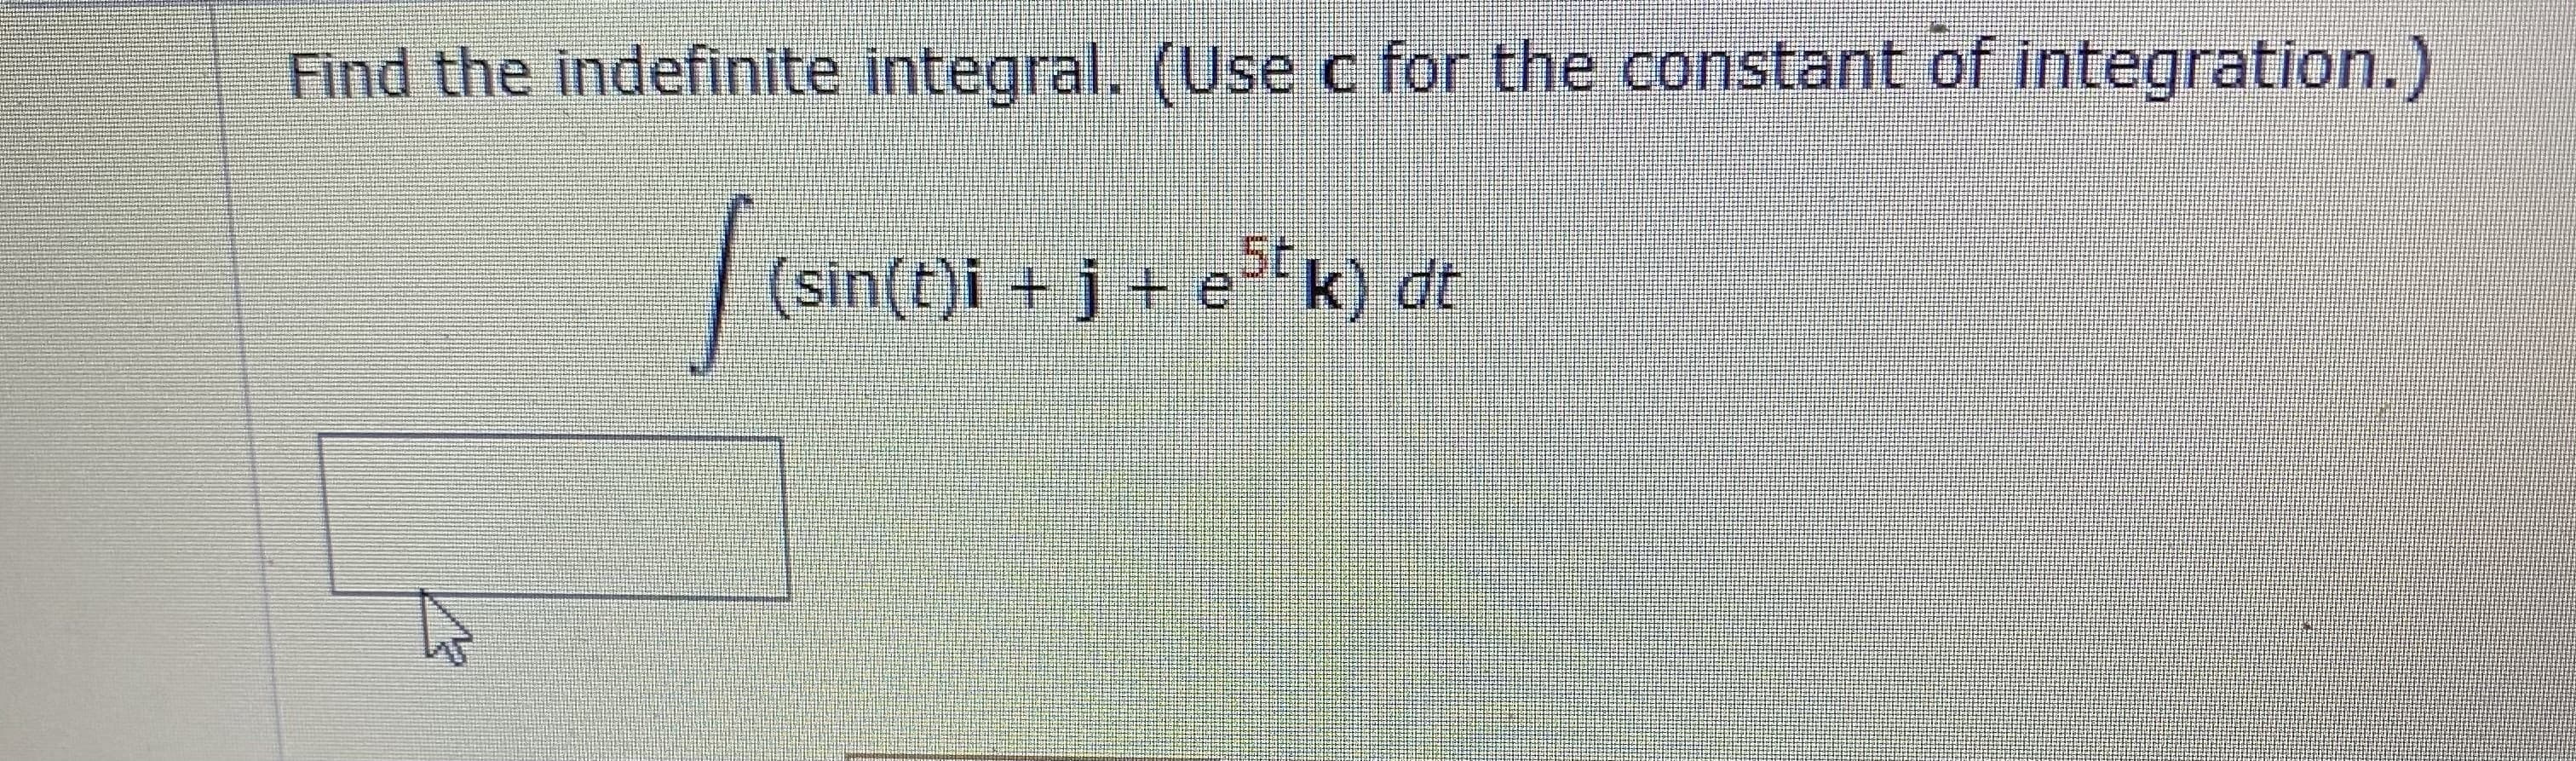 Find the indefinite integral. (Use c for the constant of integration.)
(sin(t)i + j + e"k) dt
